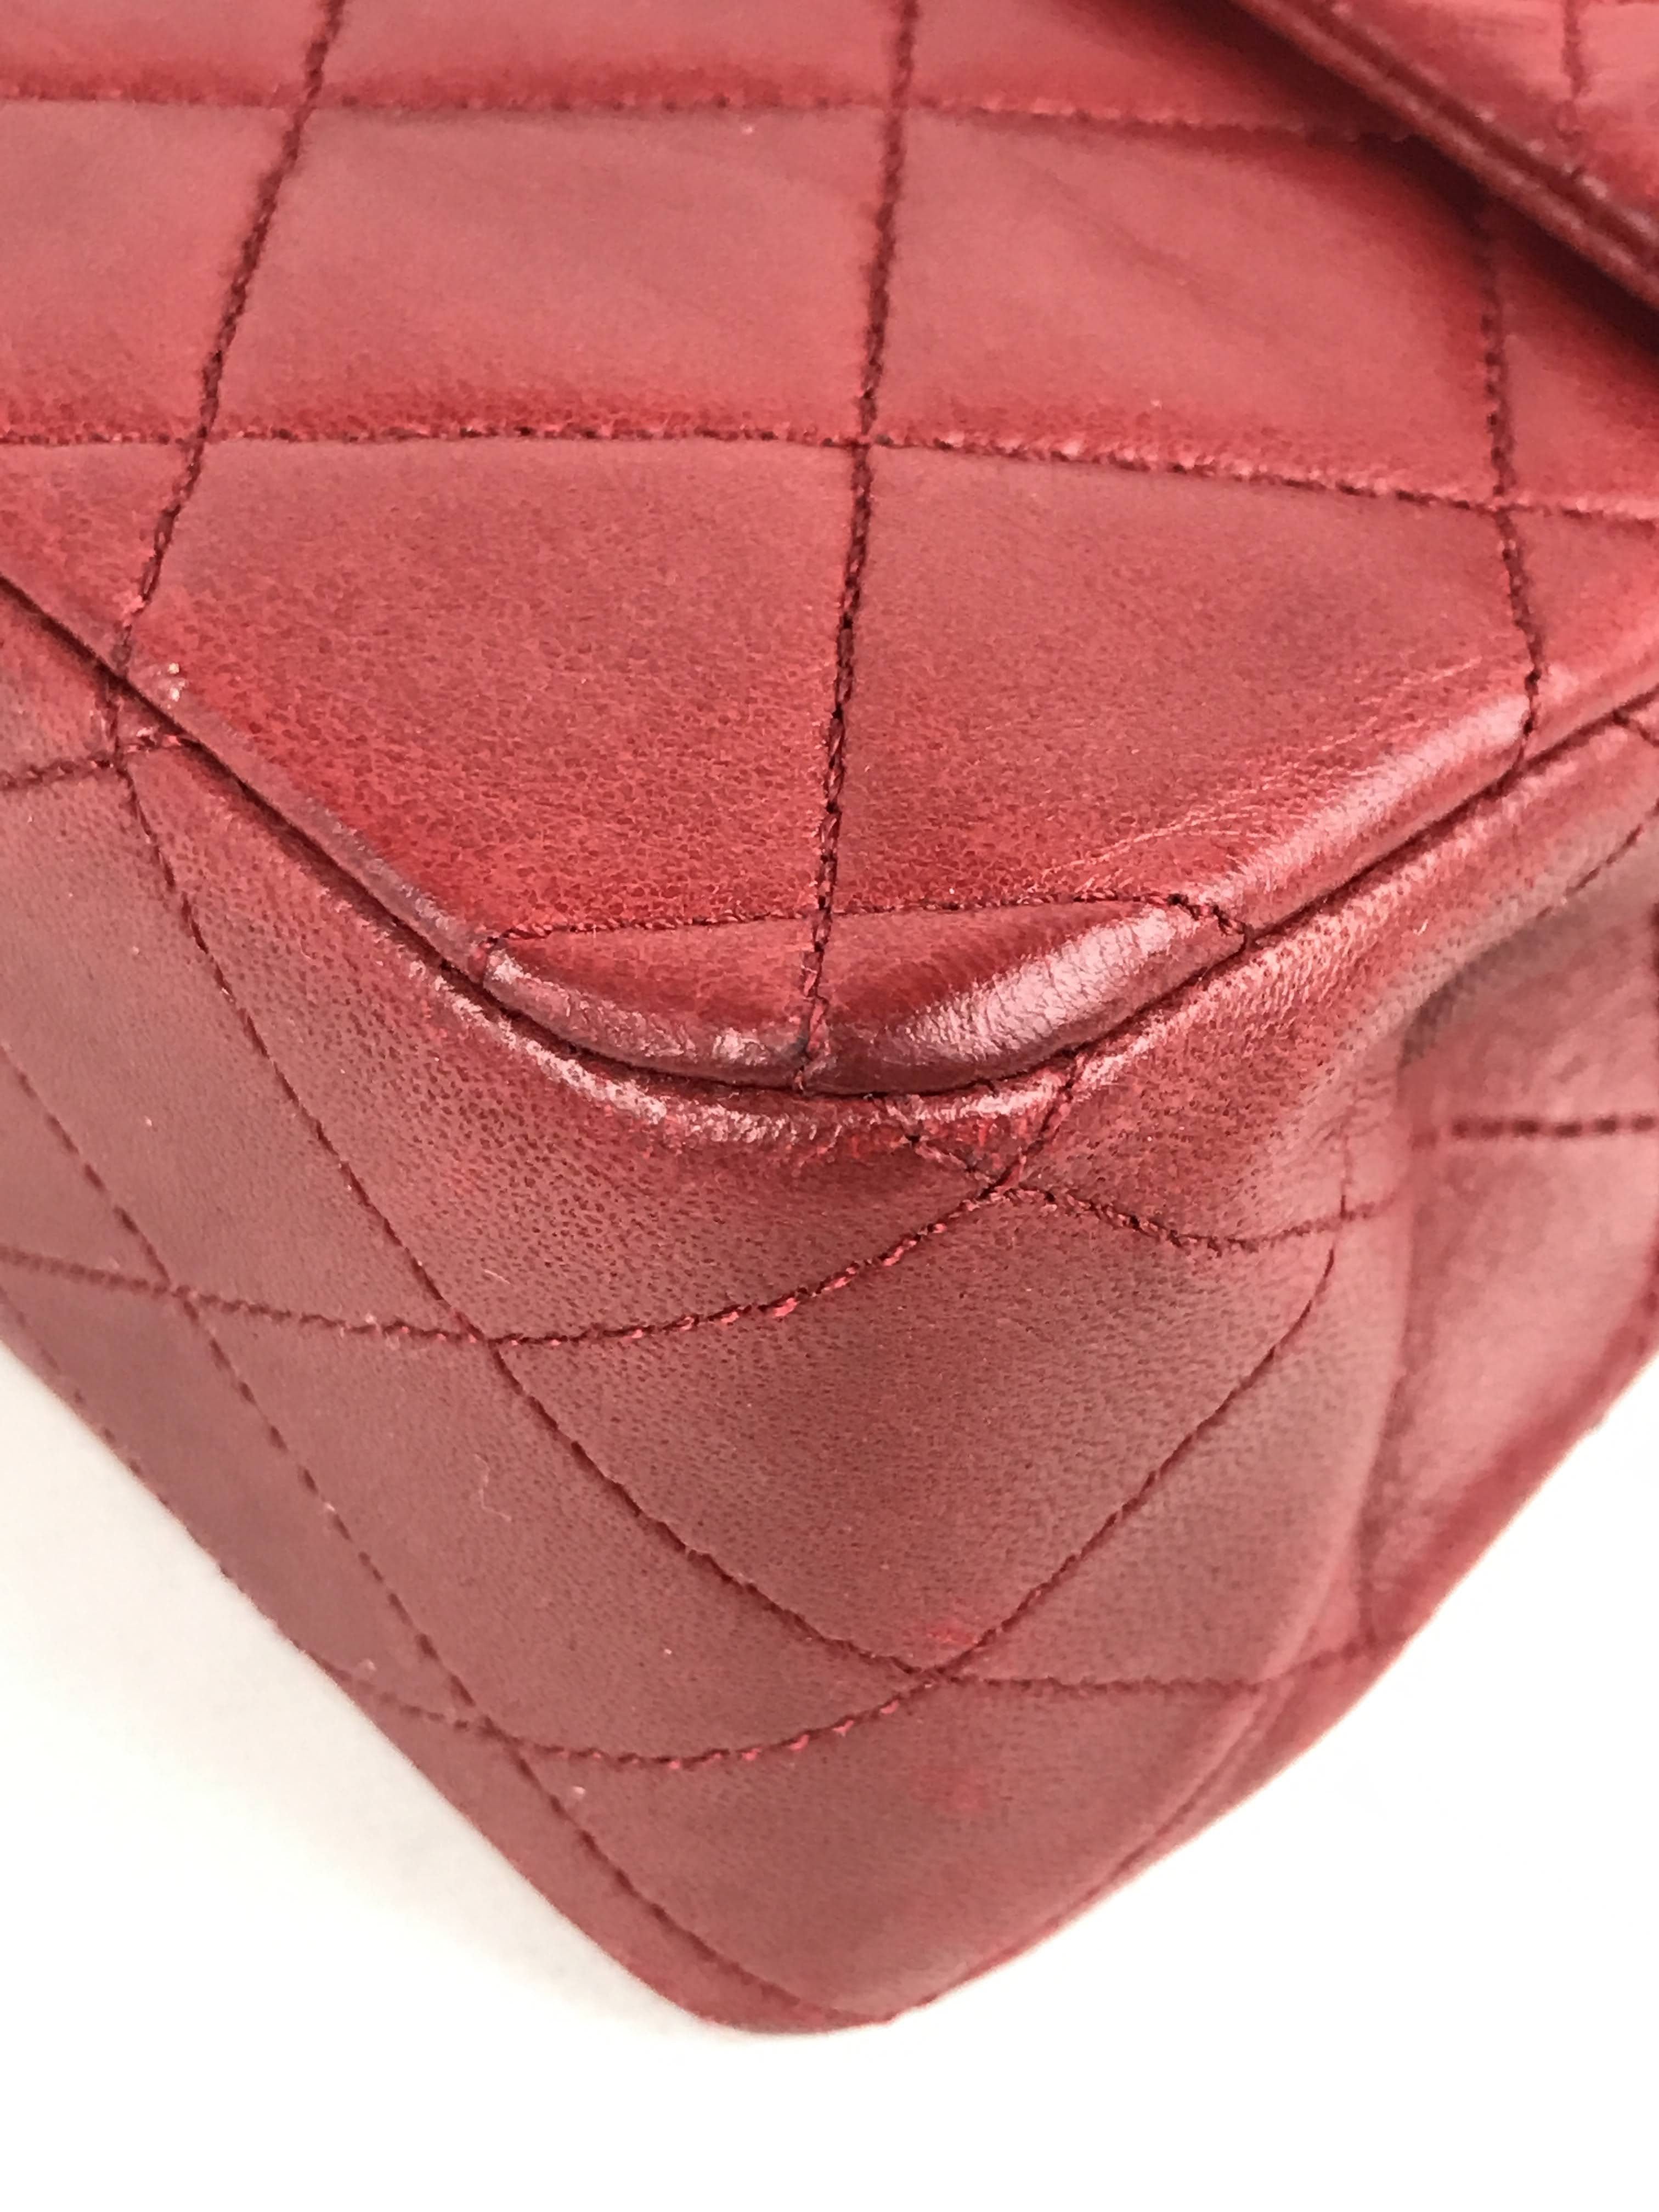 Vintage Red Medium Double Flap Bag W/24K GHW